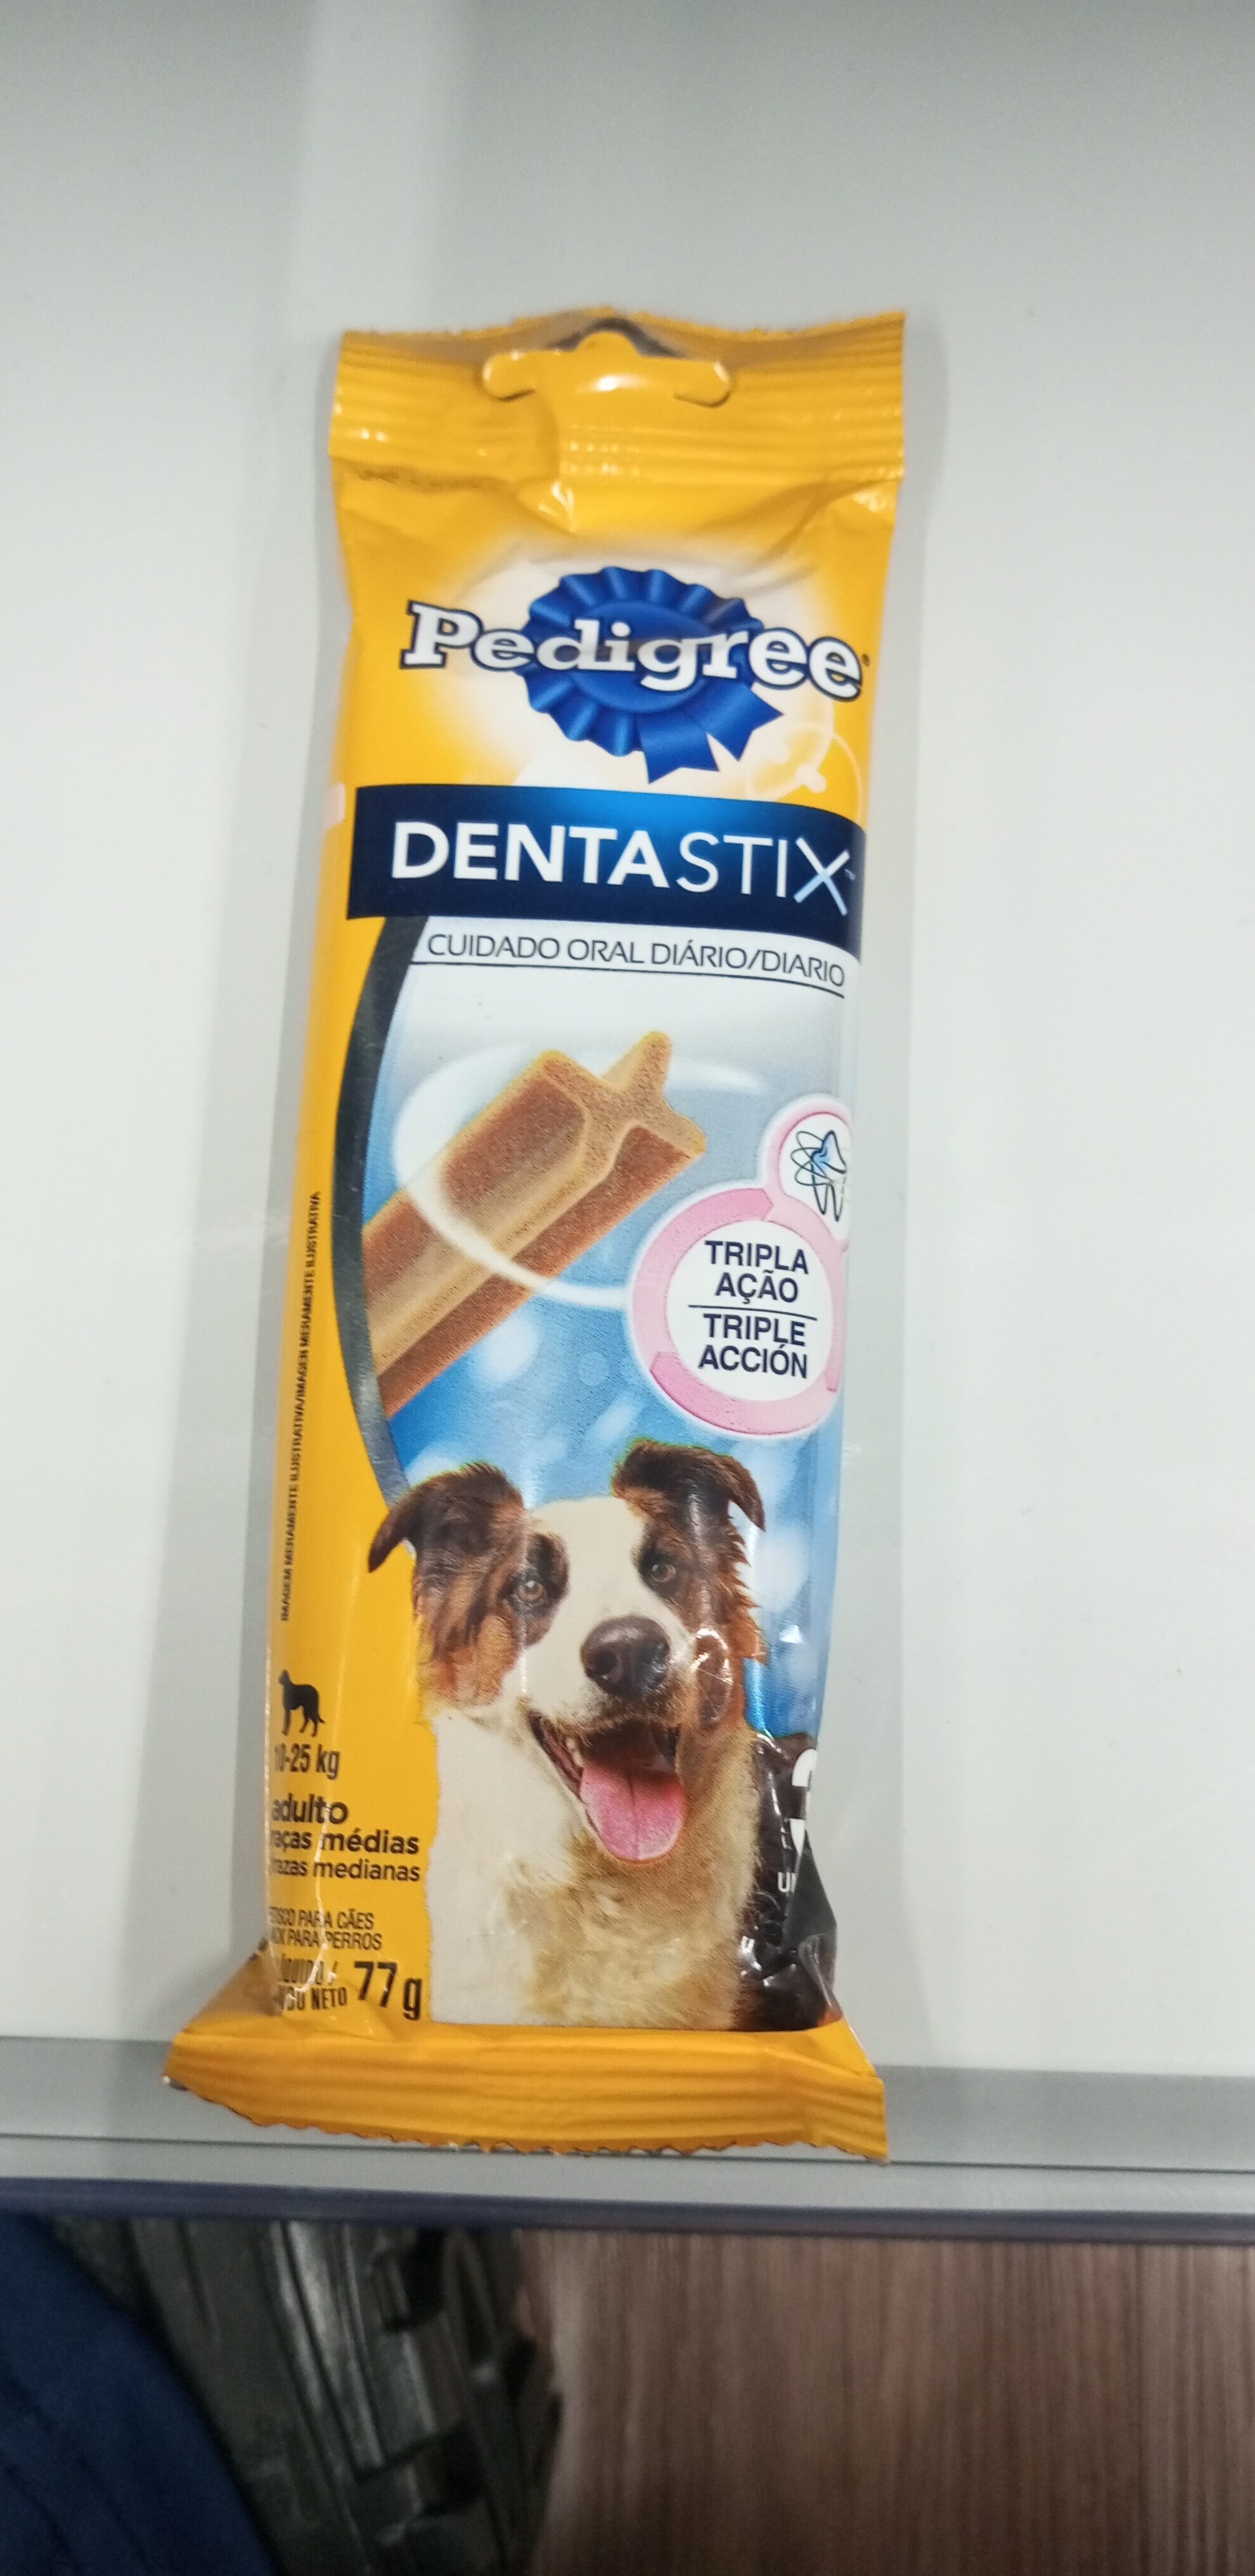 Snack cães dentastix 77gr raças médias - Product - pt